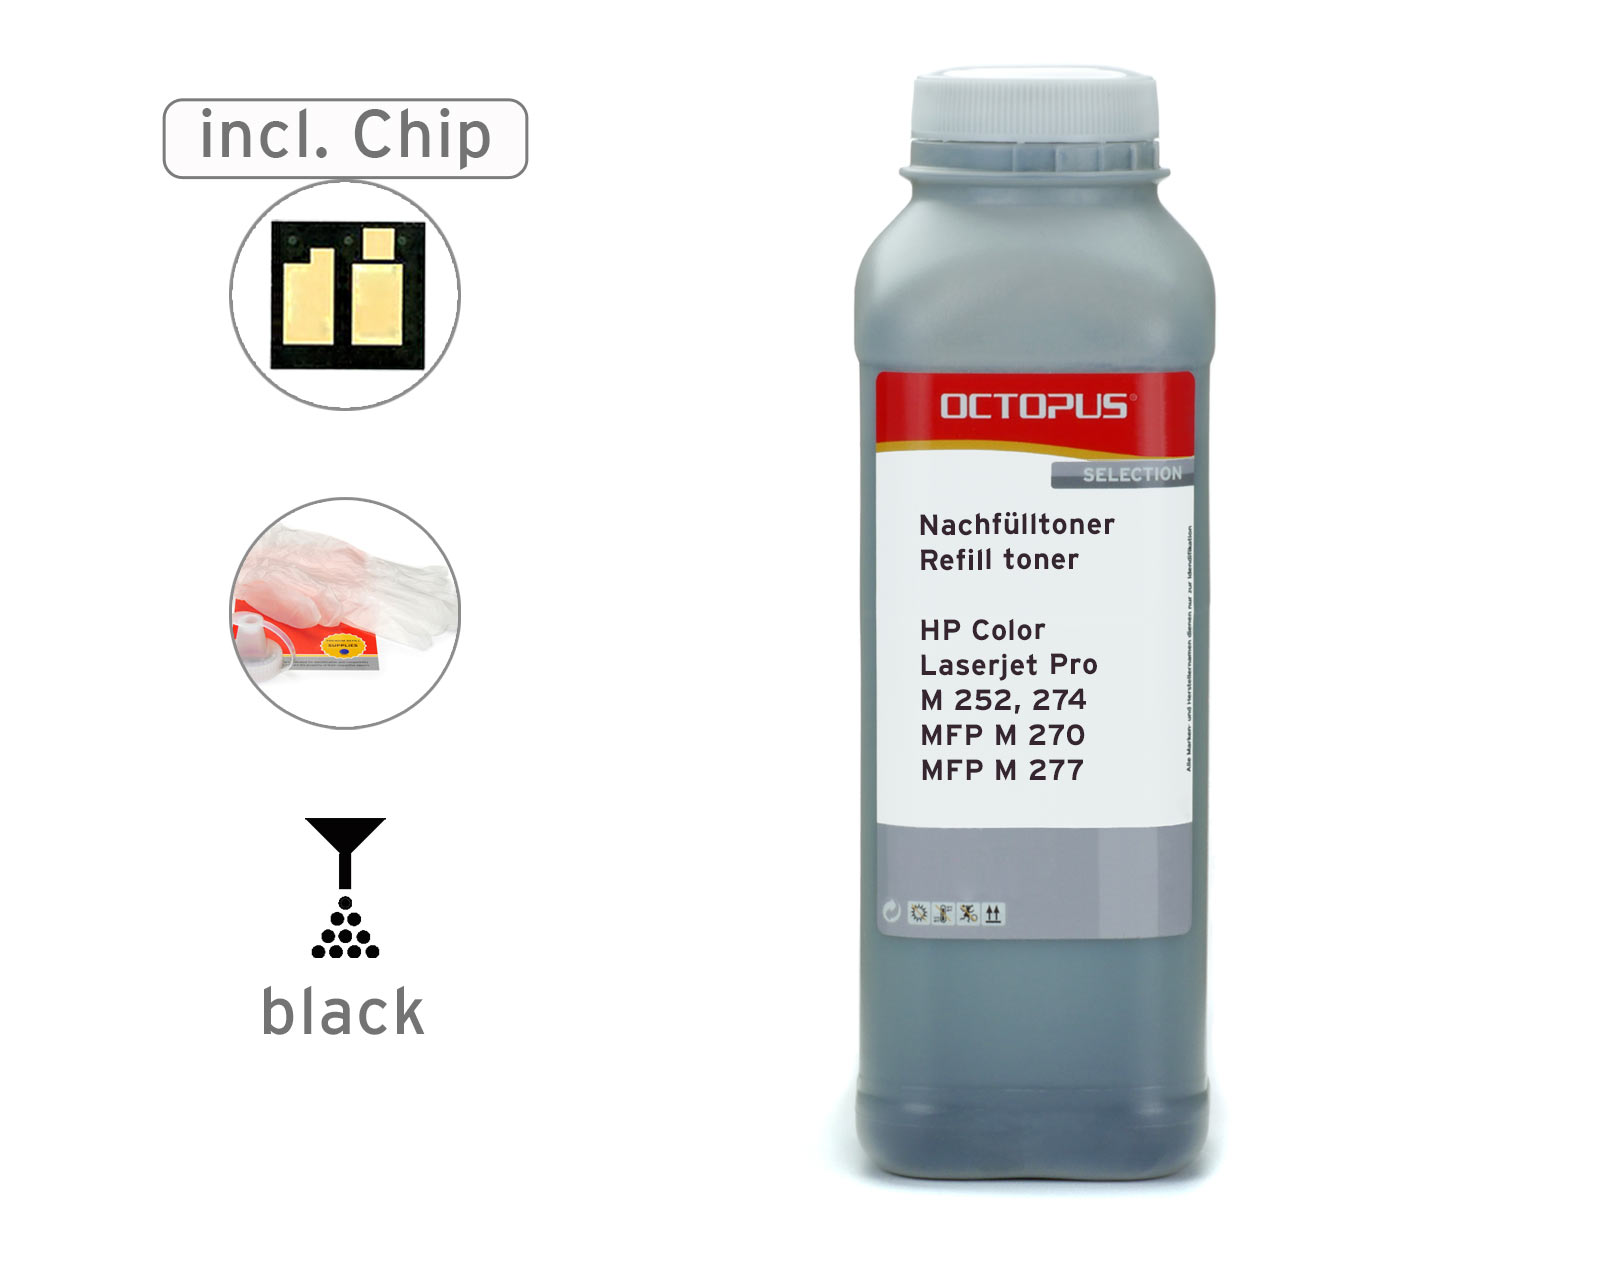 Toner refill set for HP Color Laserjet Pro M 252, MFP M 277 black with chip